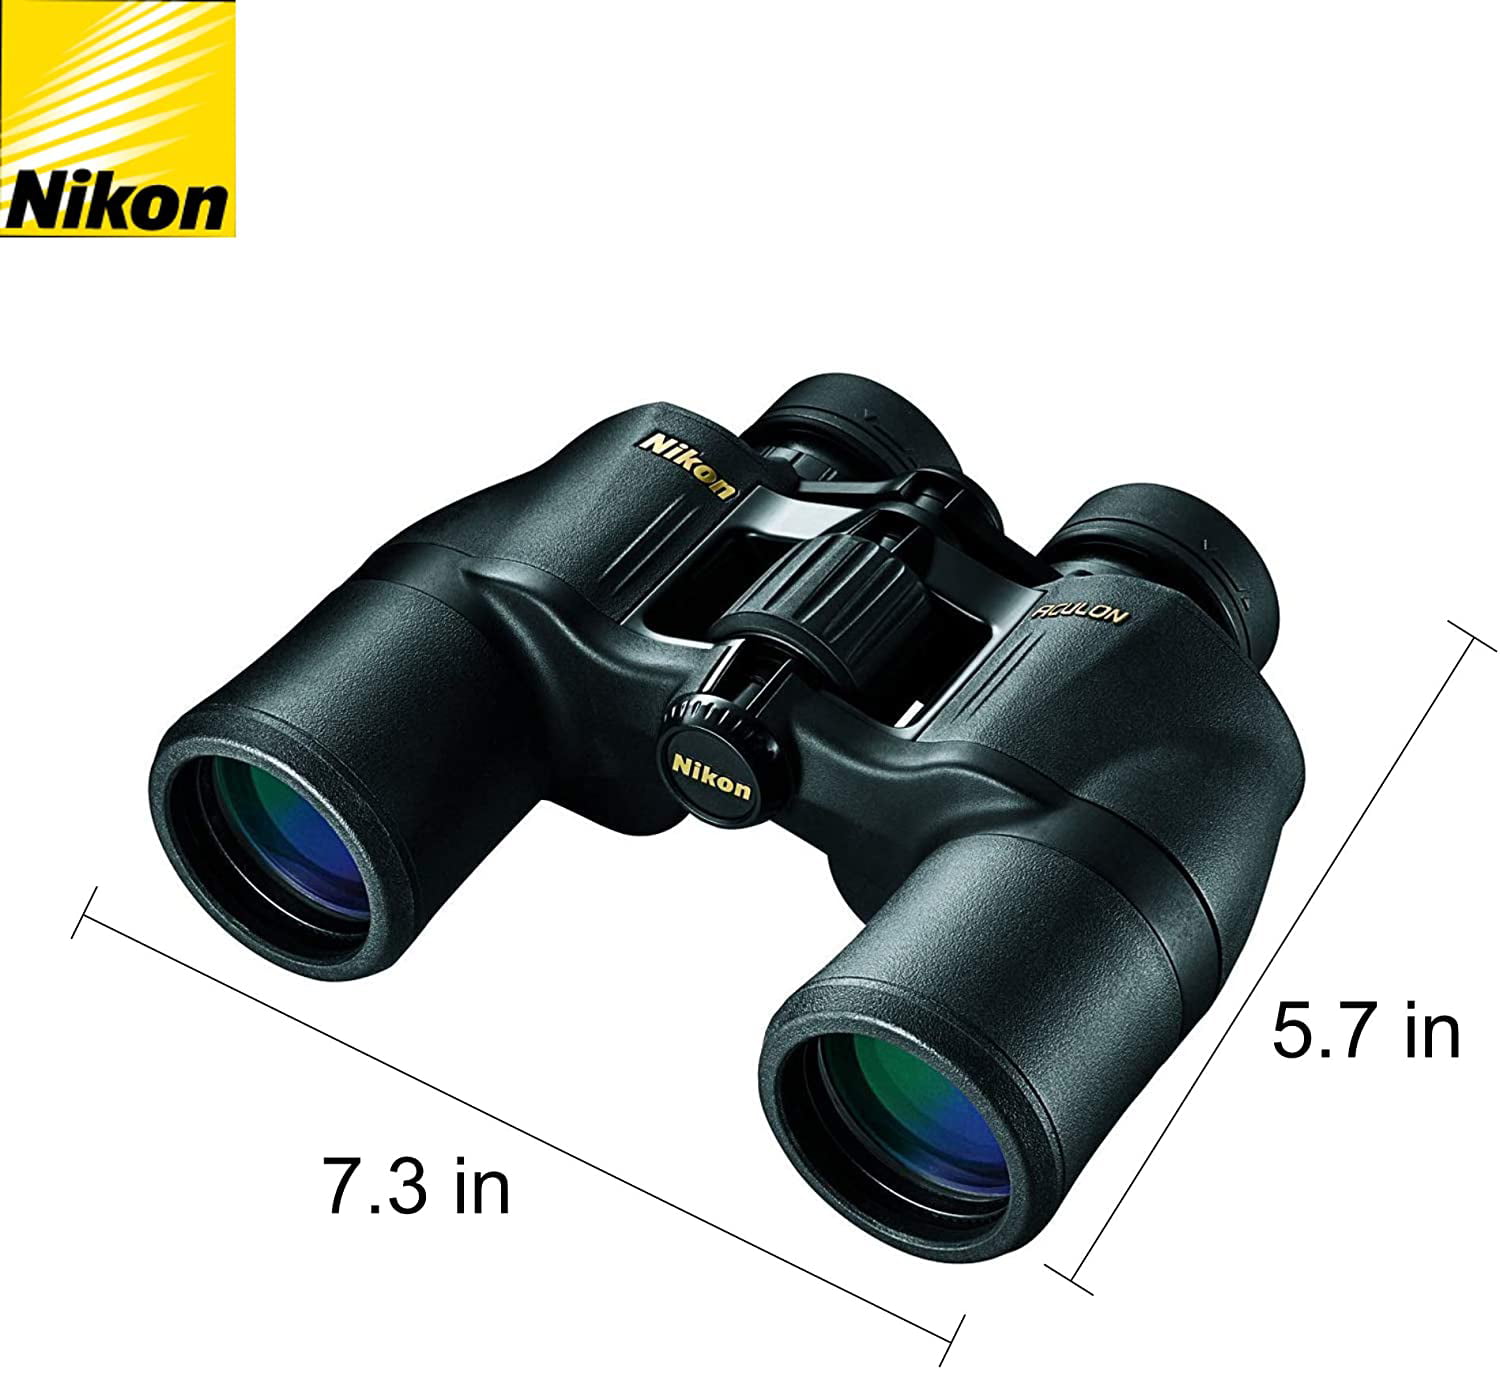 Looking to Buy Nikon 10x42 Binoculars. Learn These Top 10 Facts